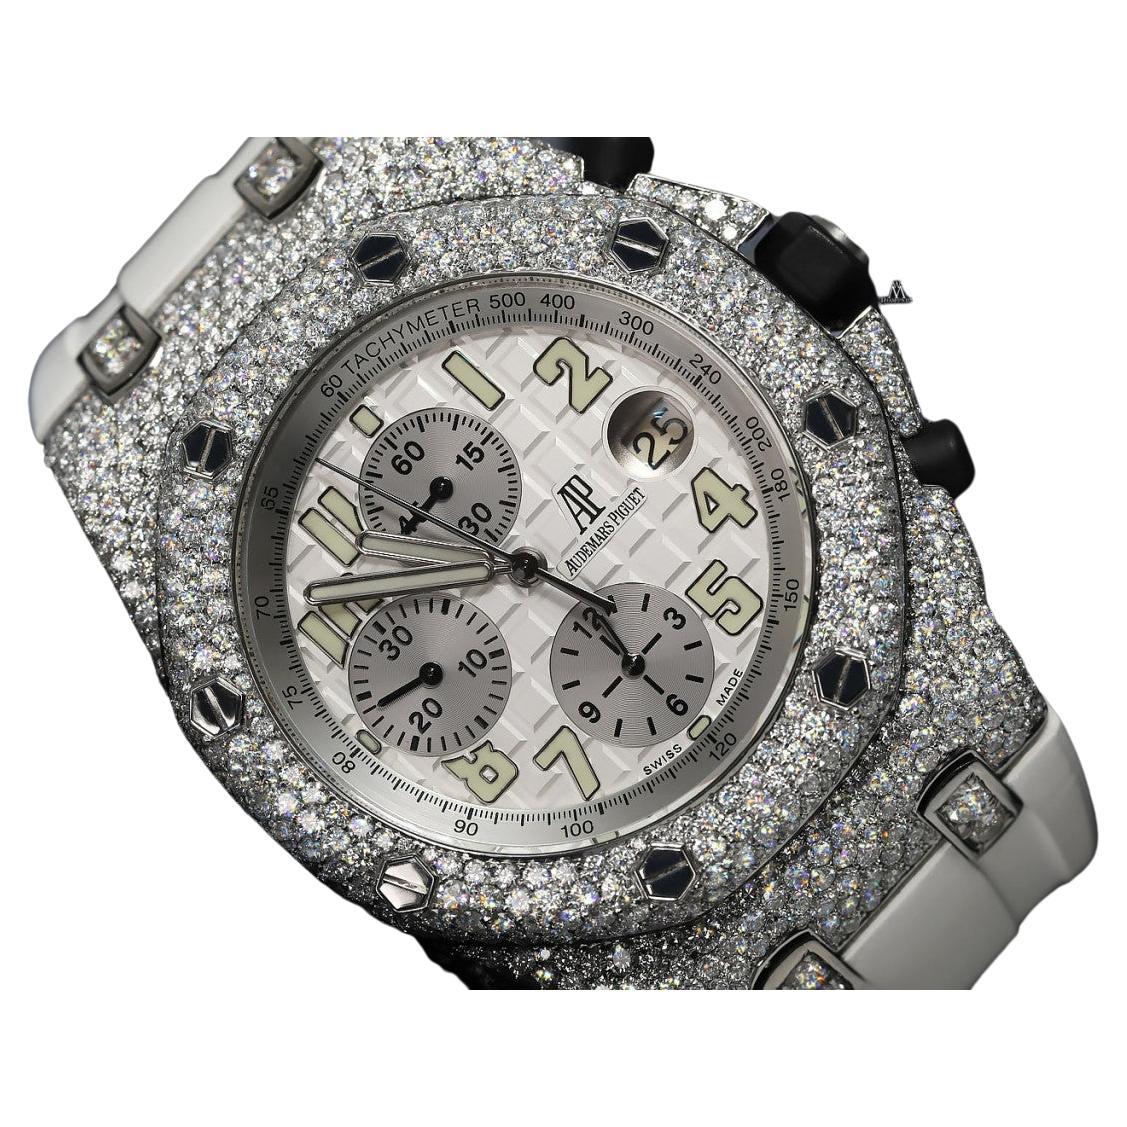 Audemars Piguet Royal Oak Offshore Customized with Genuine Diamonds Watch For Sale